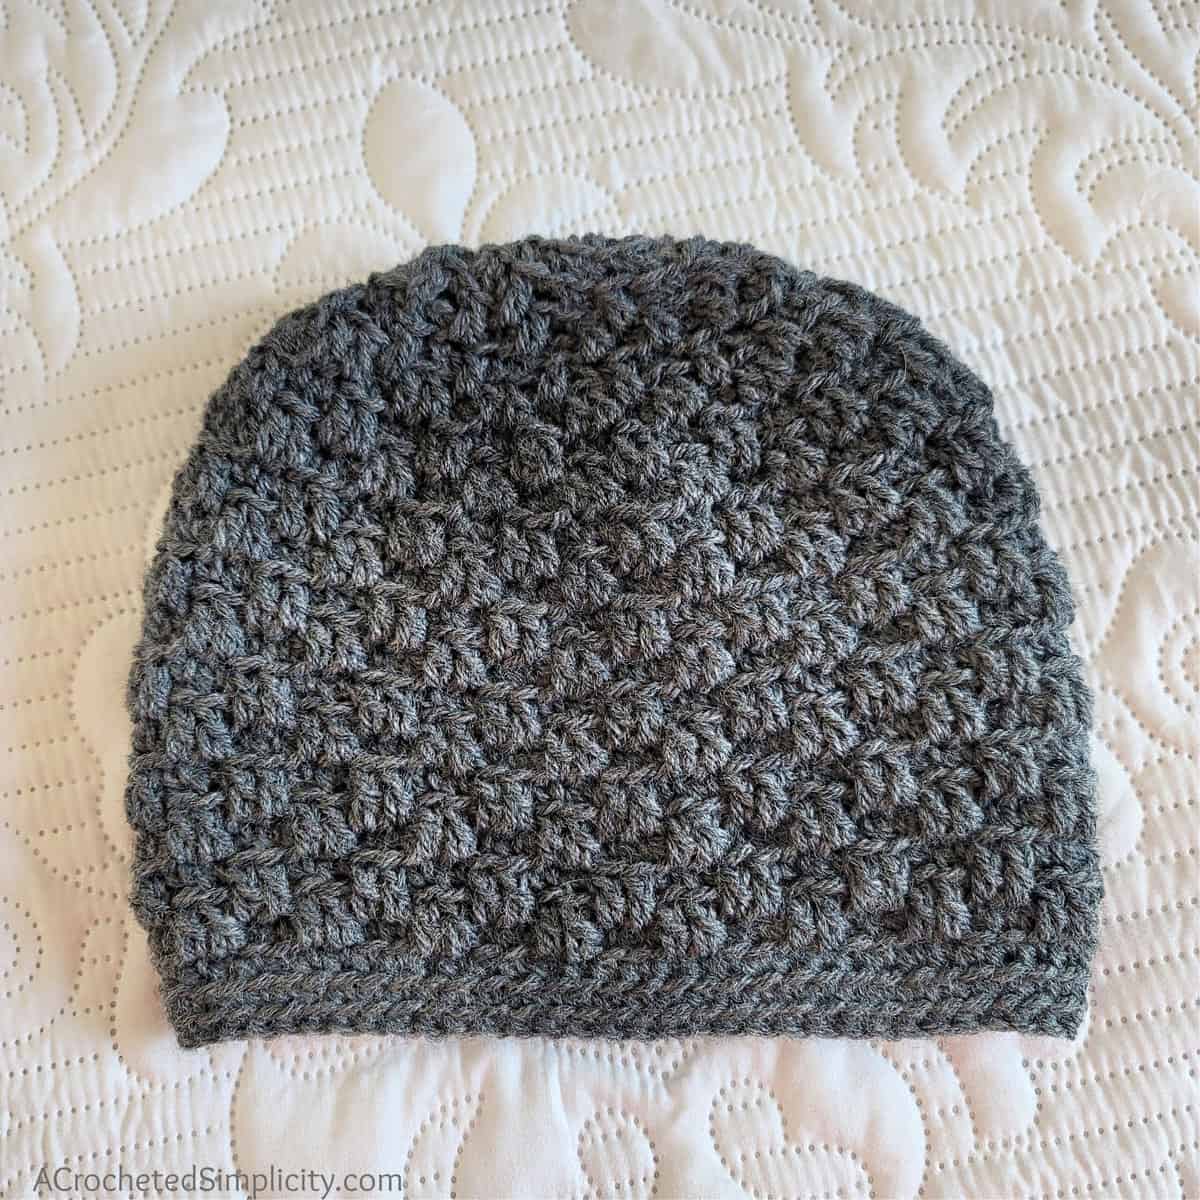 Free Crochet Hat Pattern - Avalon Beanie & Slouch by A Crocheted Simplicity #freecrochetpattern #crochethatpattern #crochetslouchpattern #crochethat #handmadehat